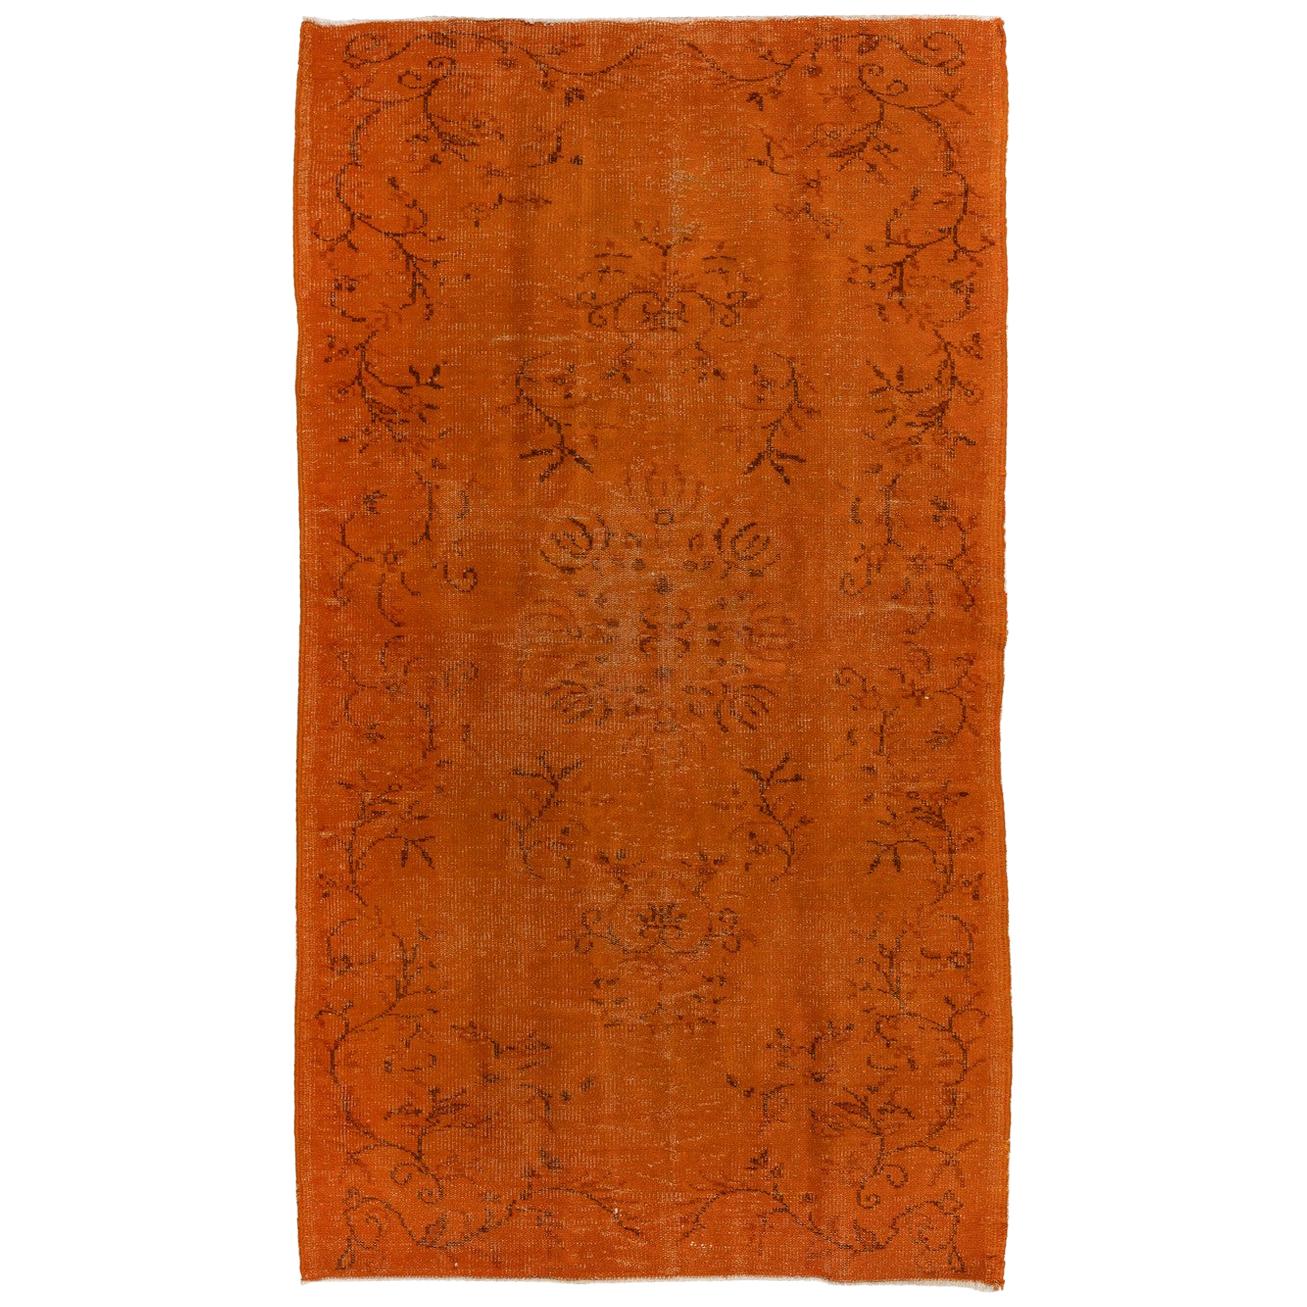 Orange Color, Overdyed Handmade Vintage Turkish Rug